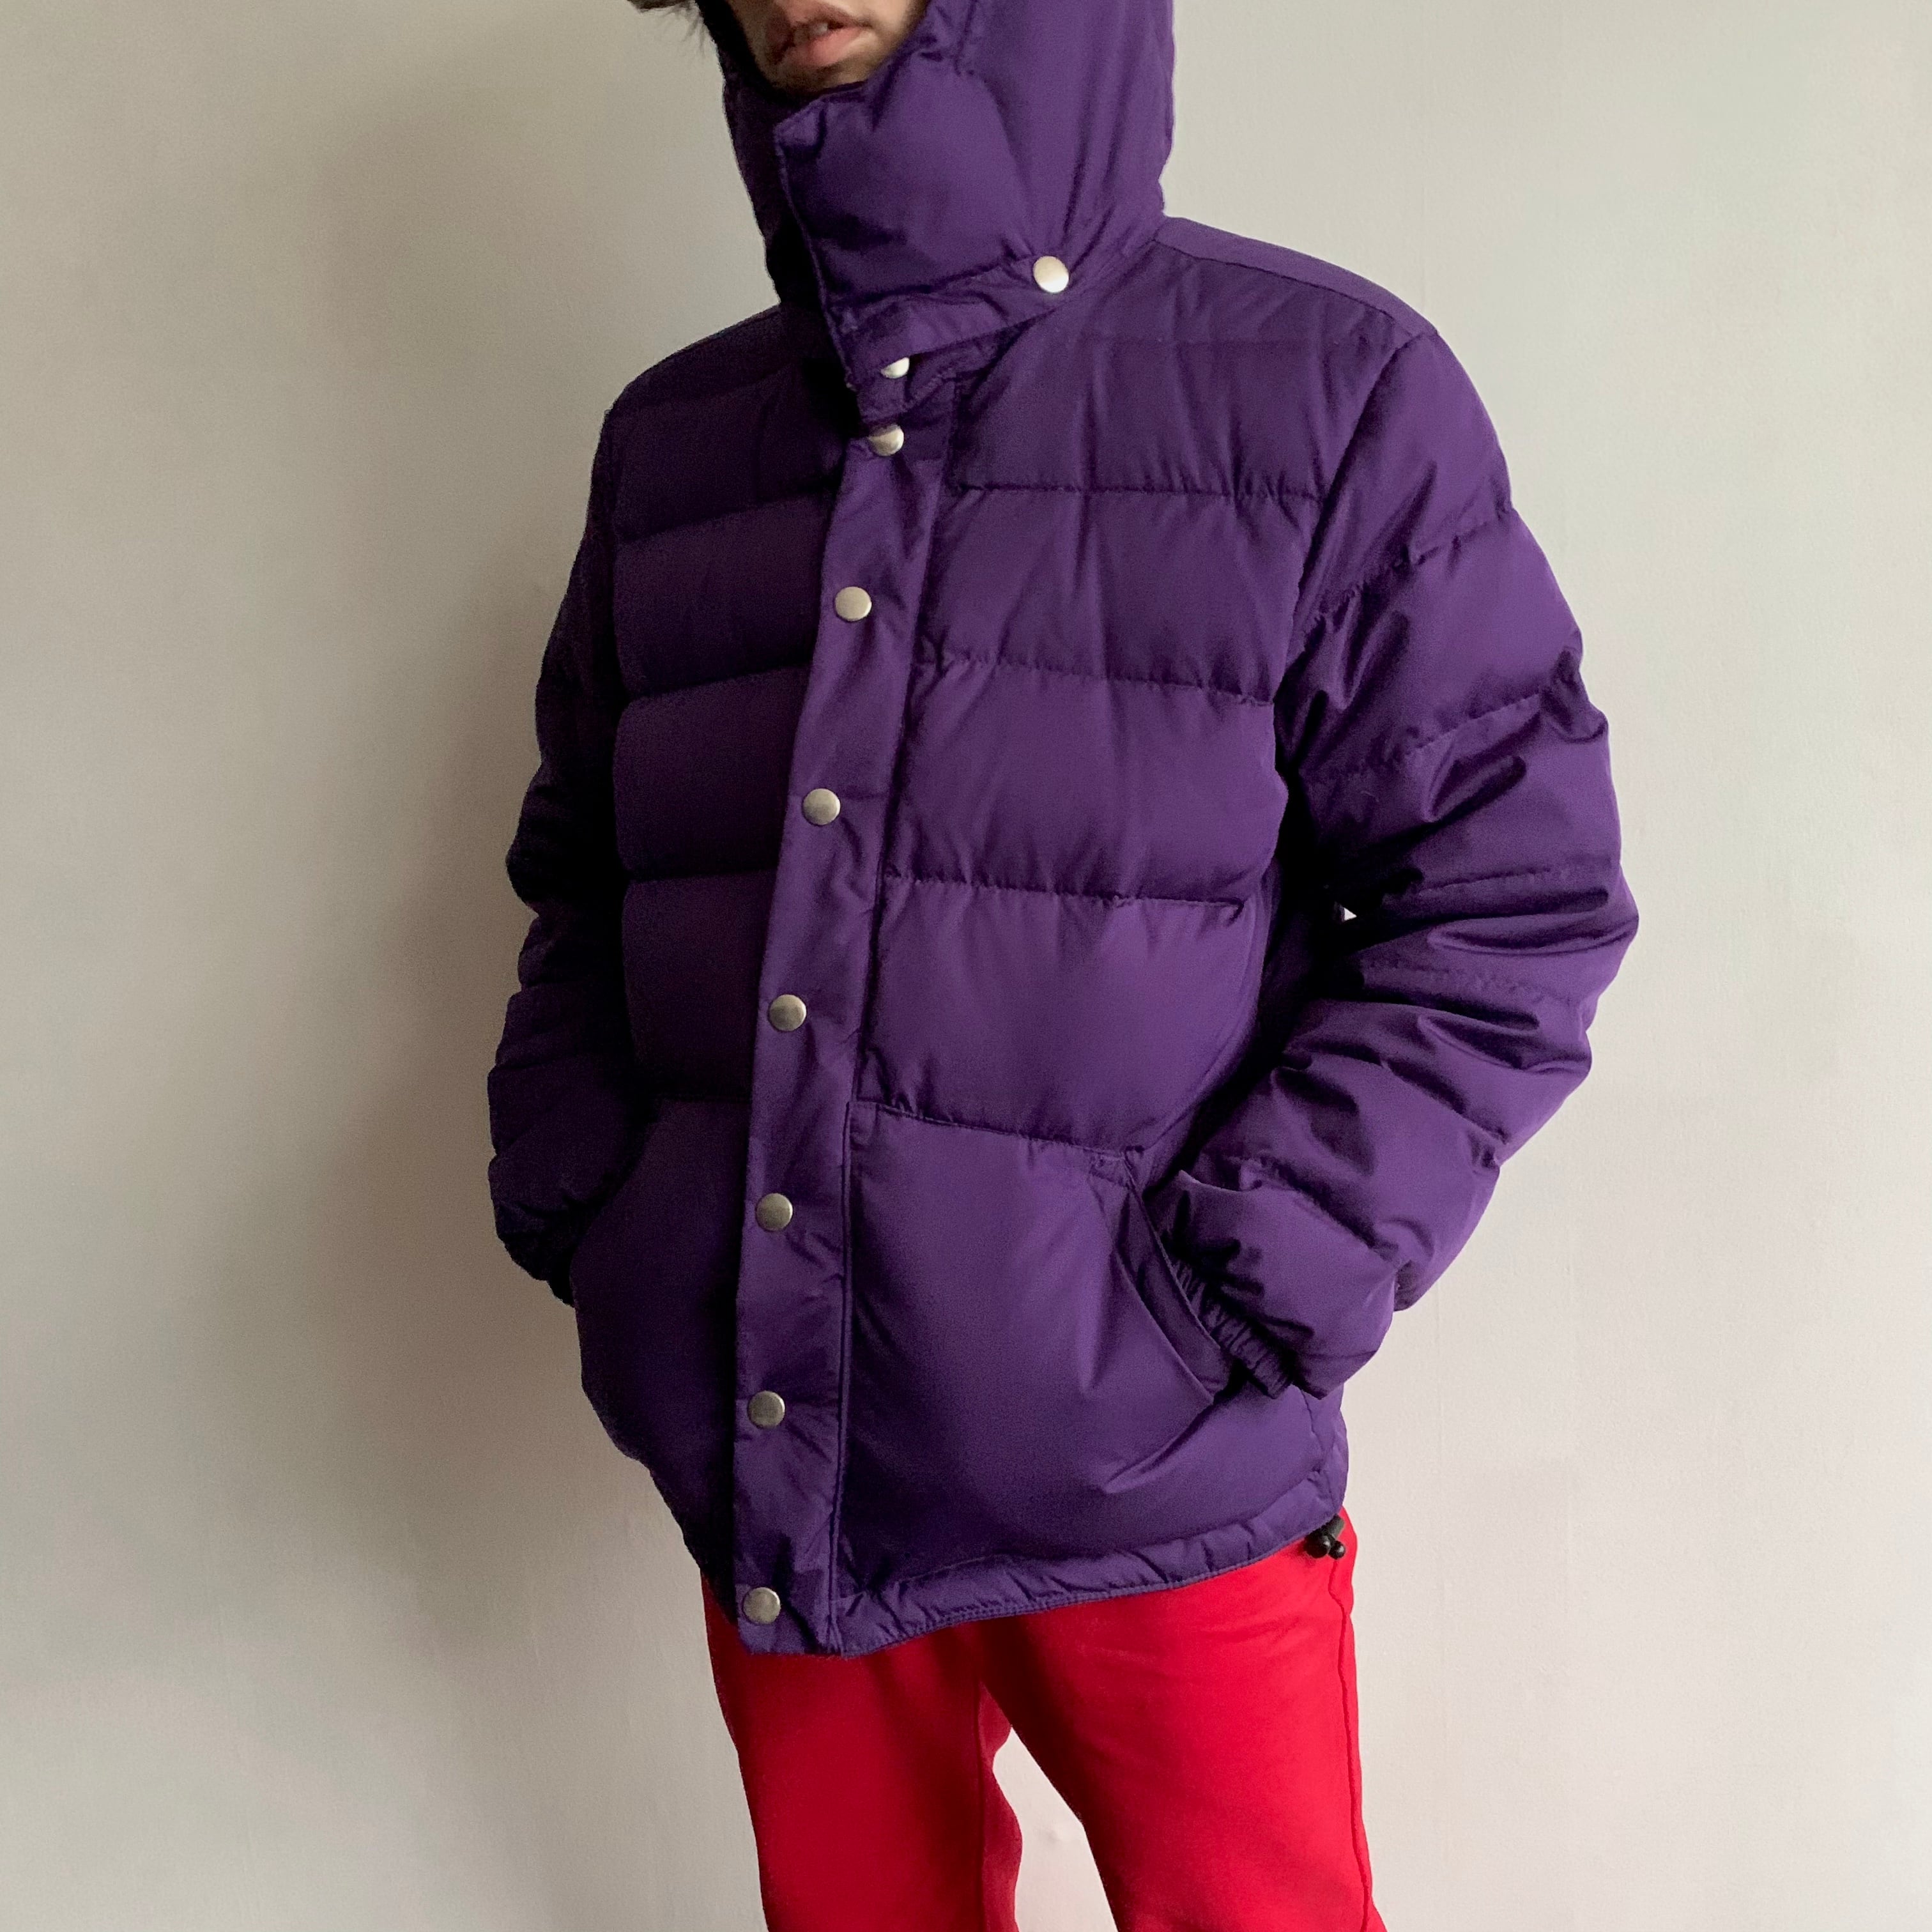 1075. Old Gap Down jacket purple 00s 00年代 オールドギャップ